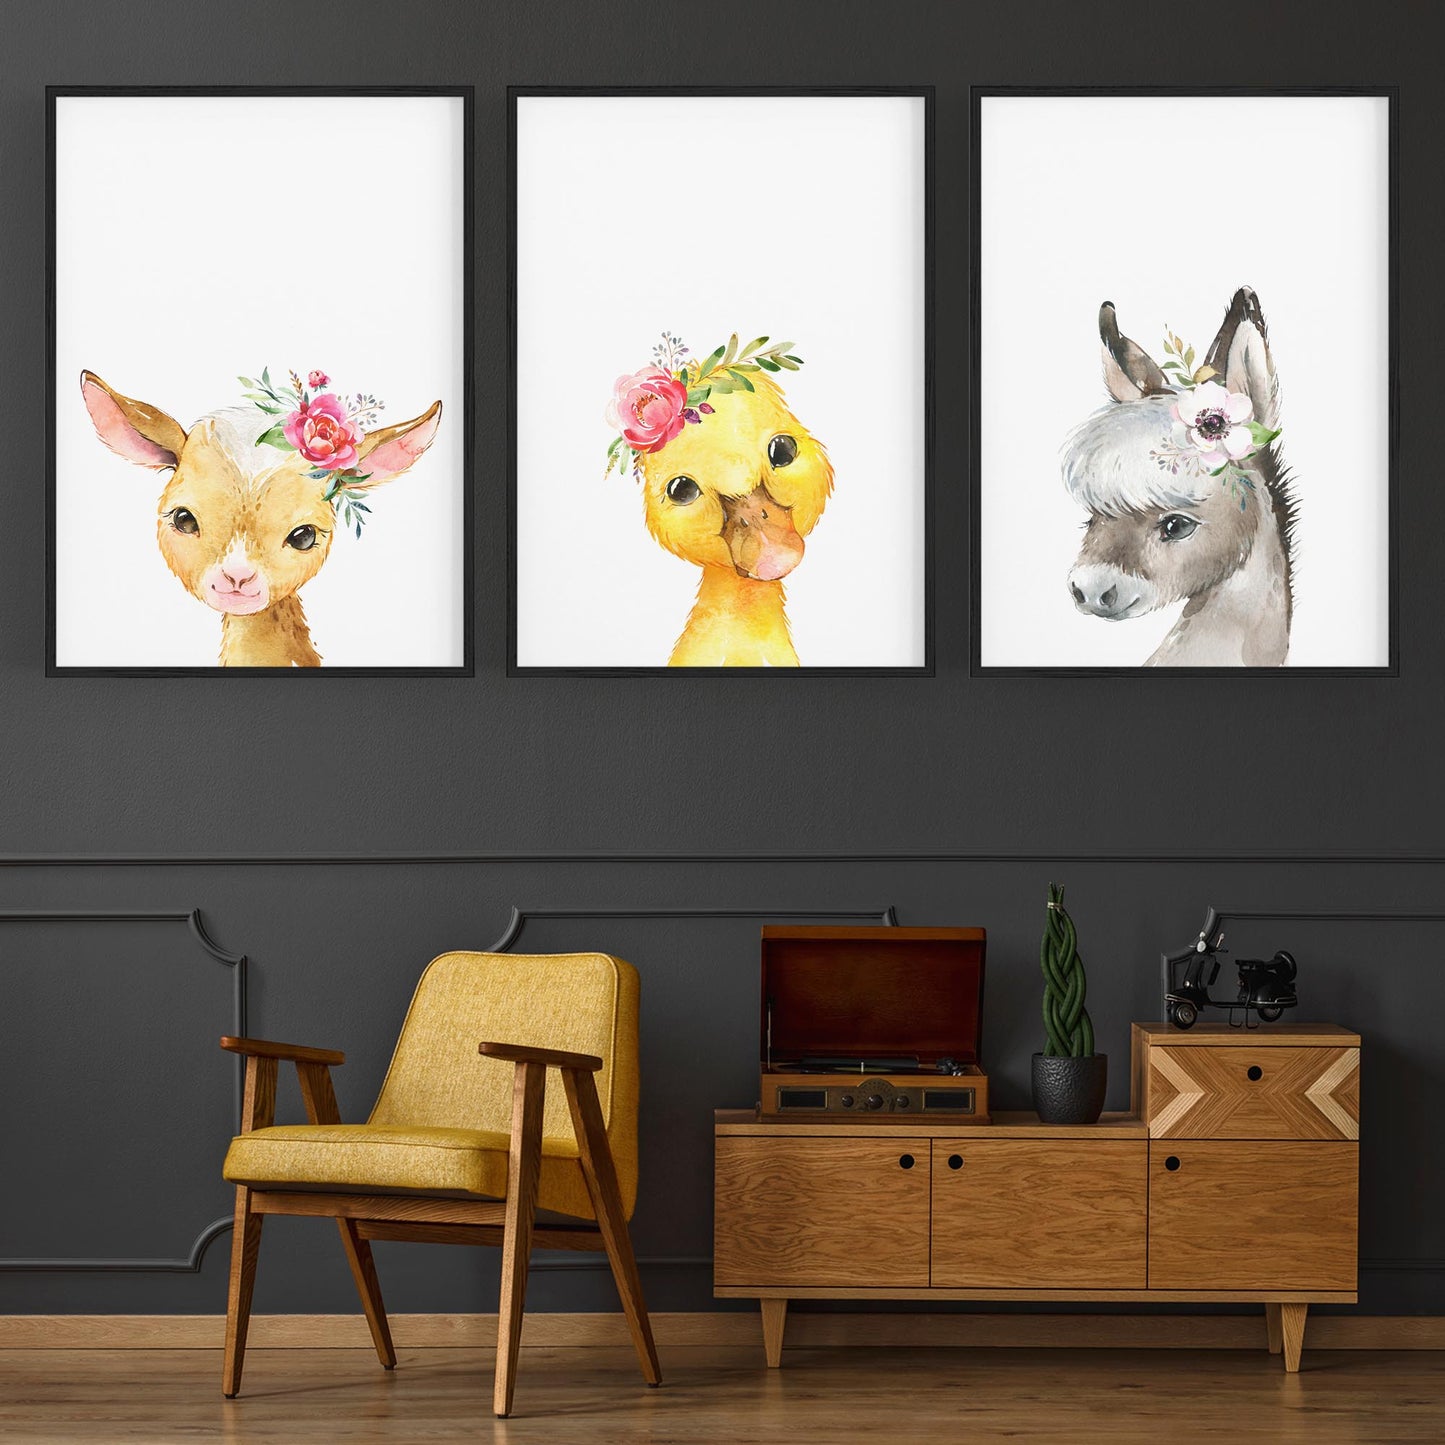 Set of Cute Baby Farm Animals Nursery Wall Art #2 - The Affordable Art Company